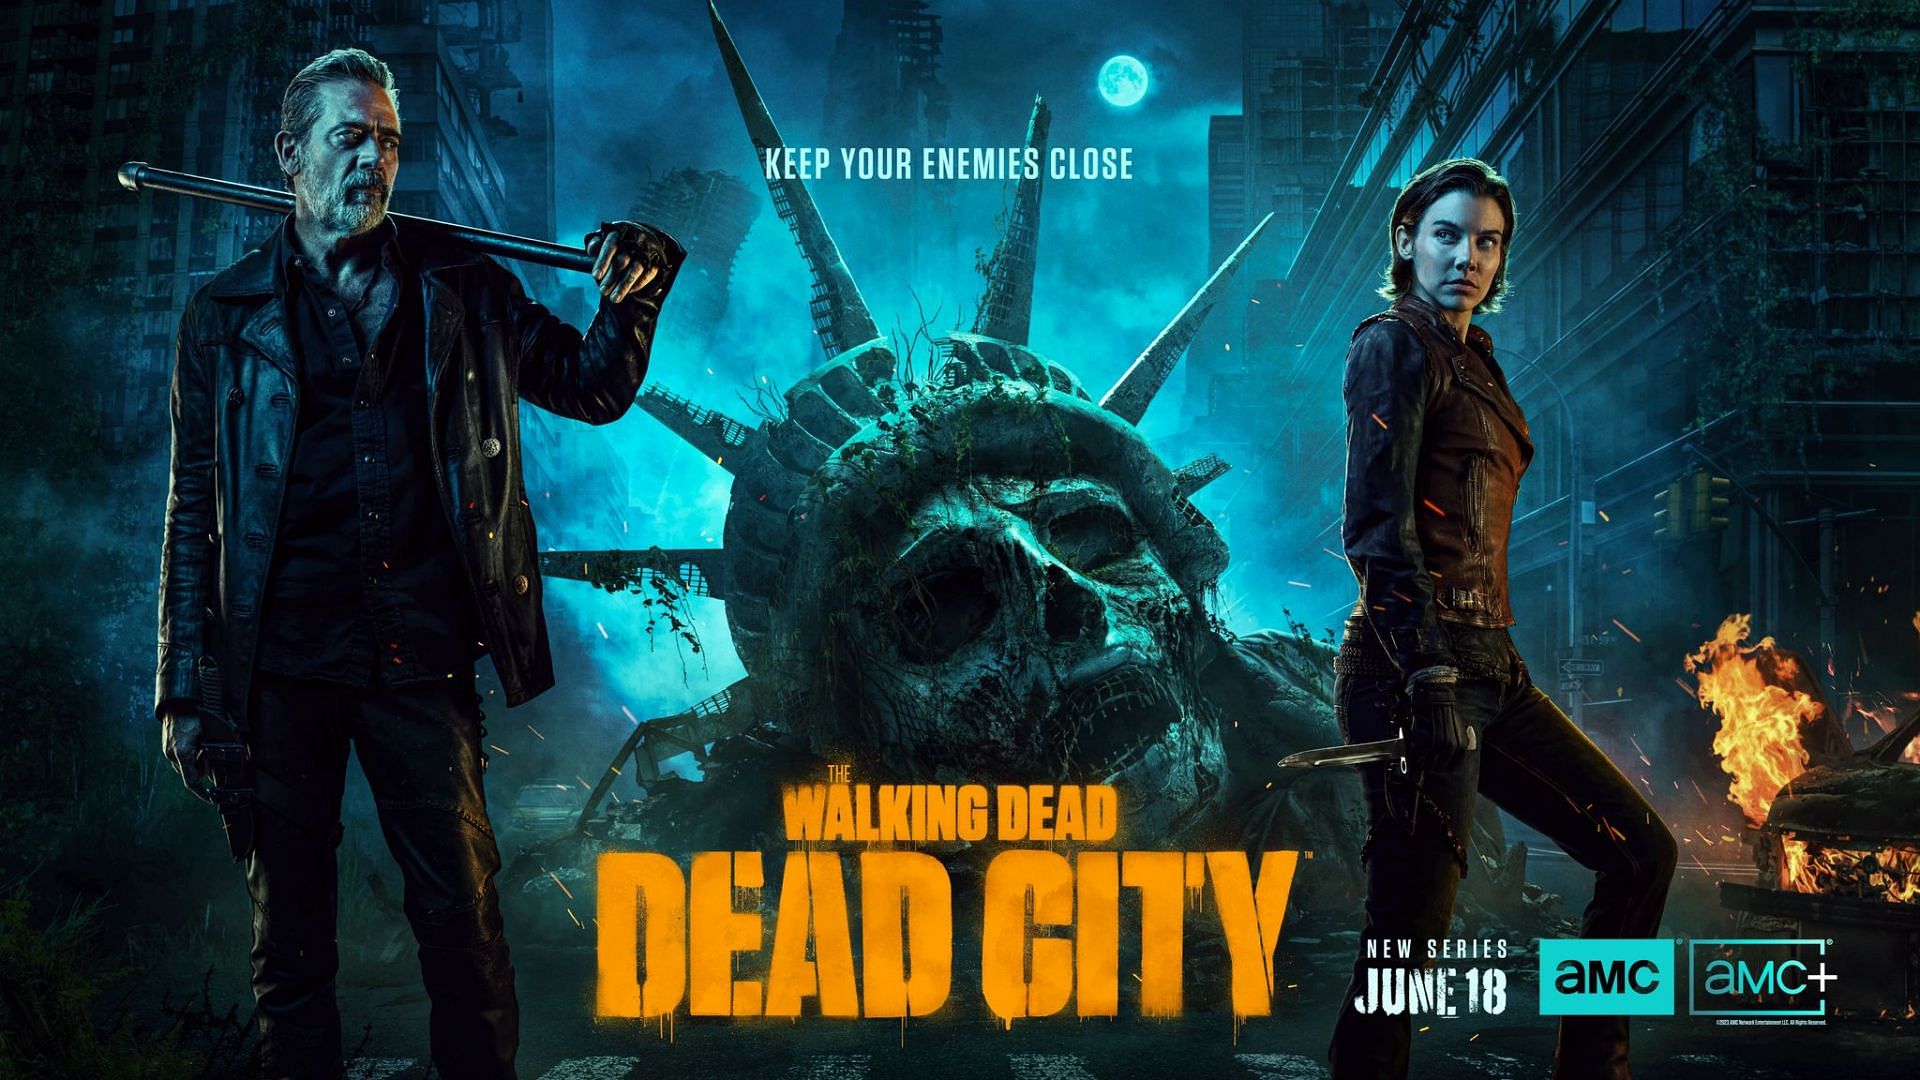 Key art for The Walking Dead: Dead City (Sent by AMC Networks)